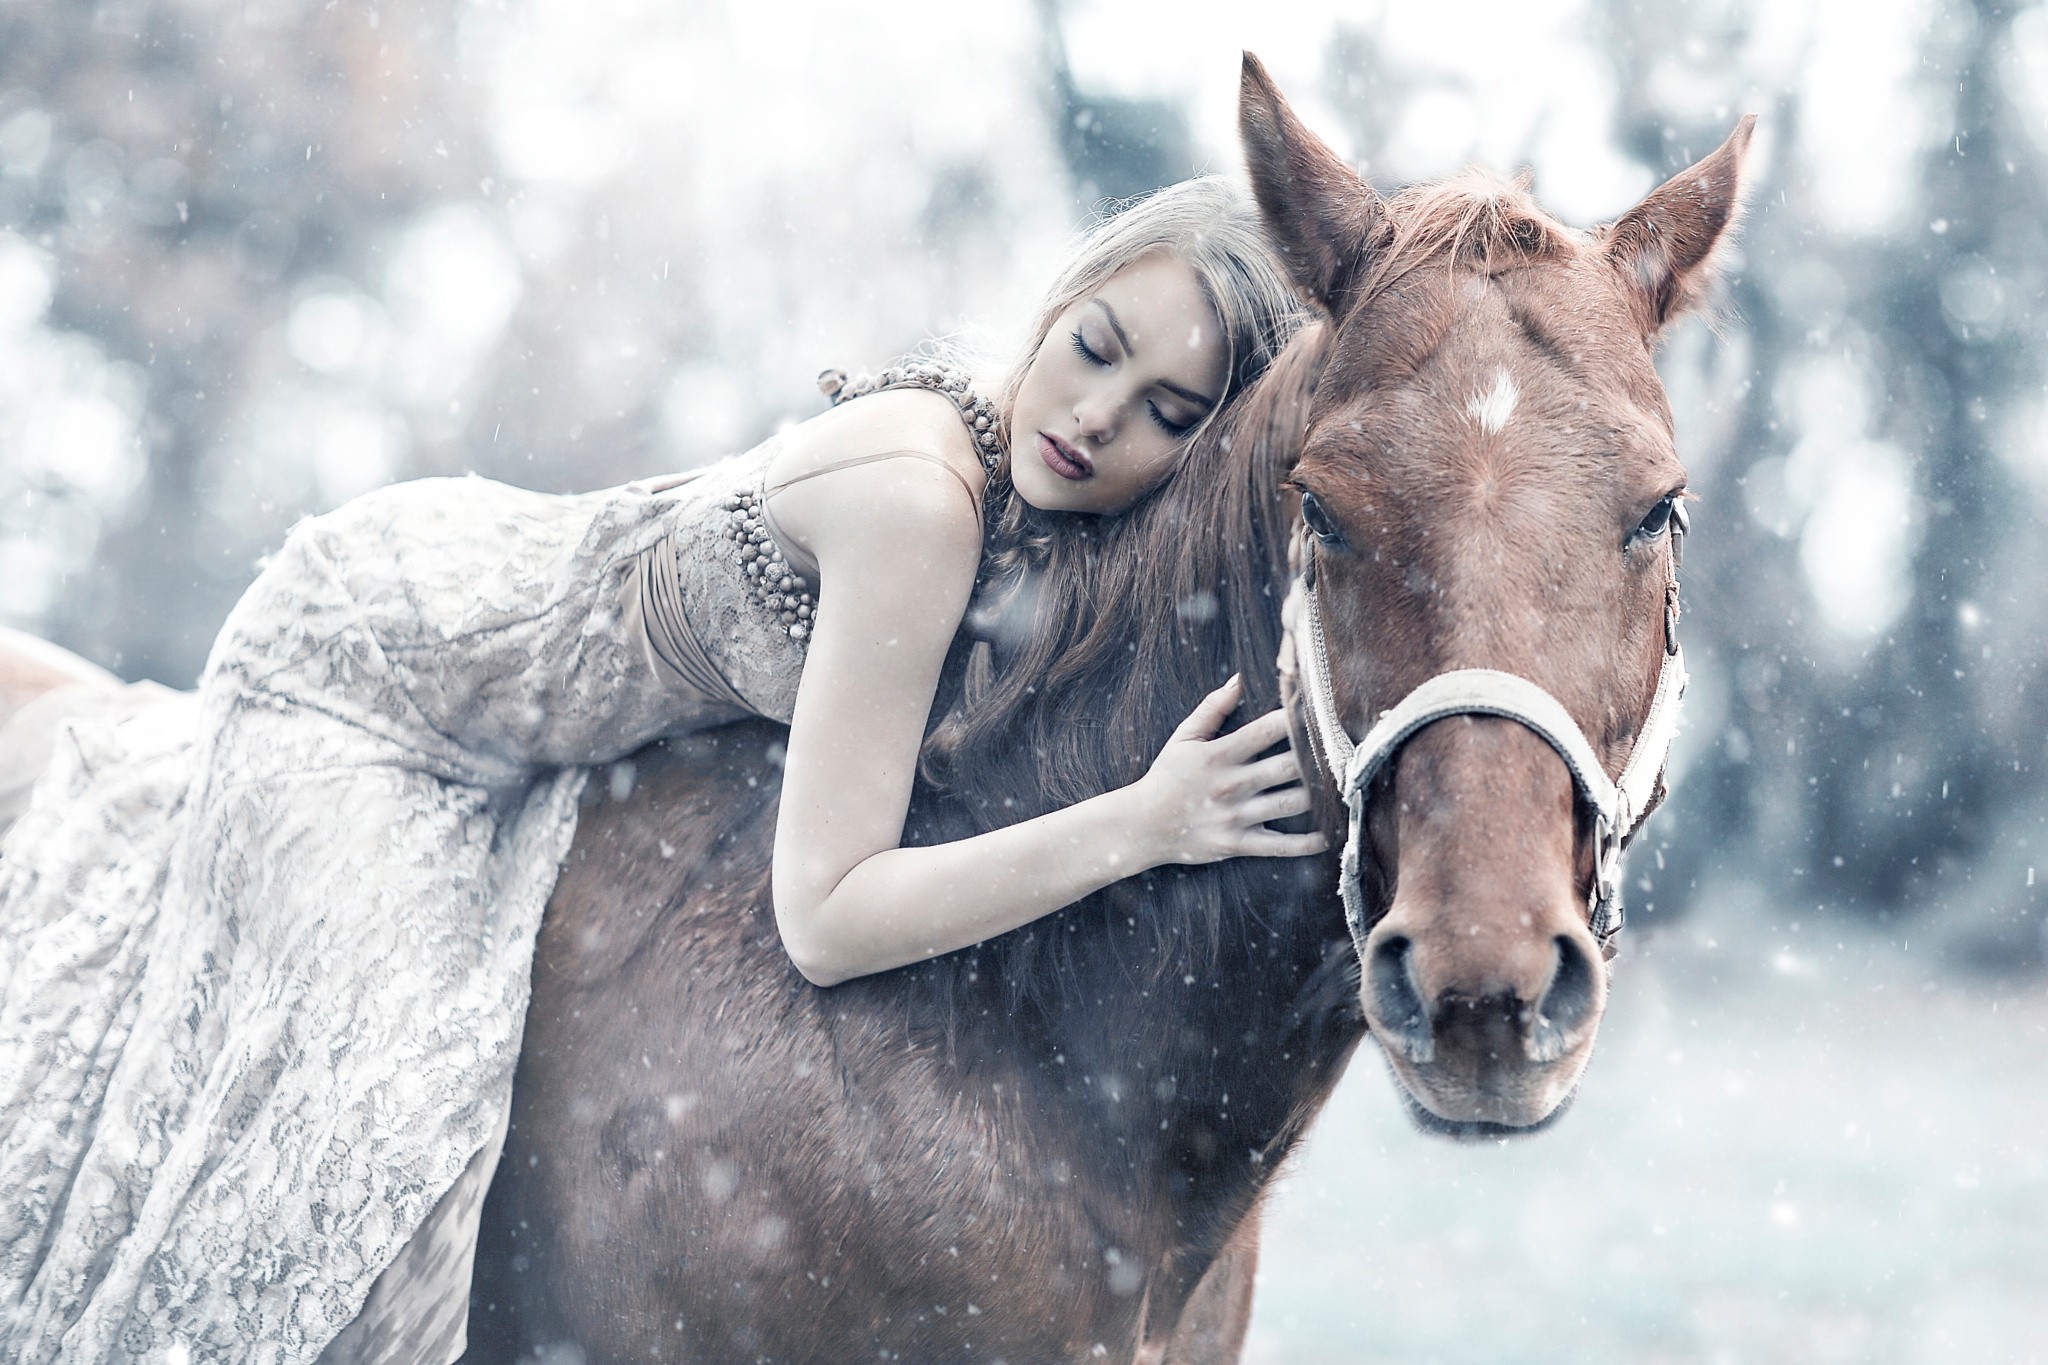 Лежа на коне. Лошади зимой. Фотосессия с лошадкой. Зимняя фотосессия с лошадью. Фотосессия с лошадью зимой.